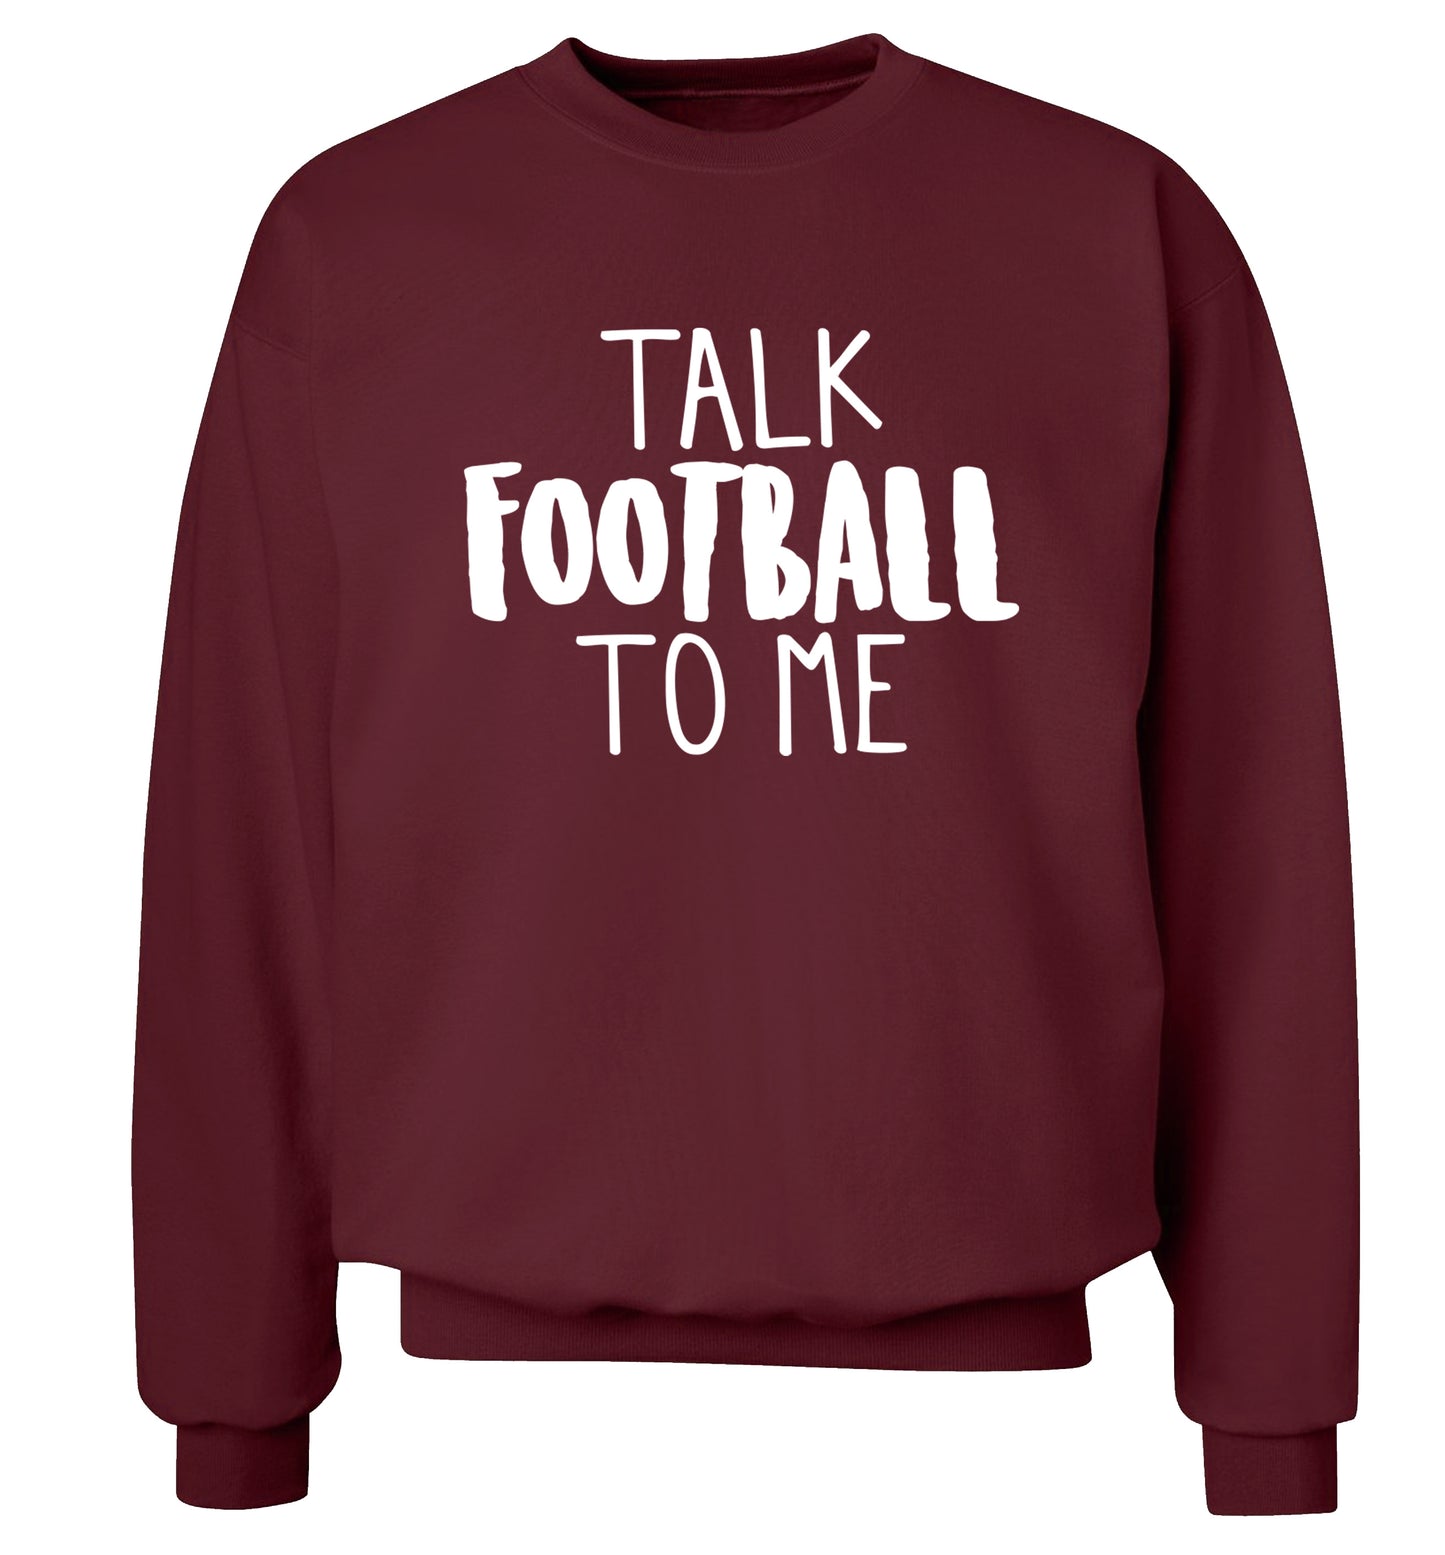 Talk football to me Adult's unisexmaroon Sweater 2XL